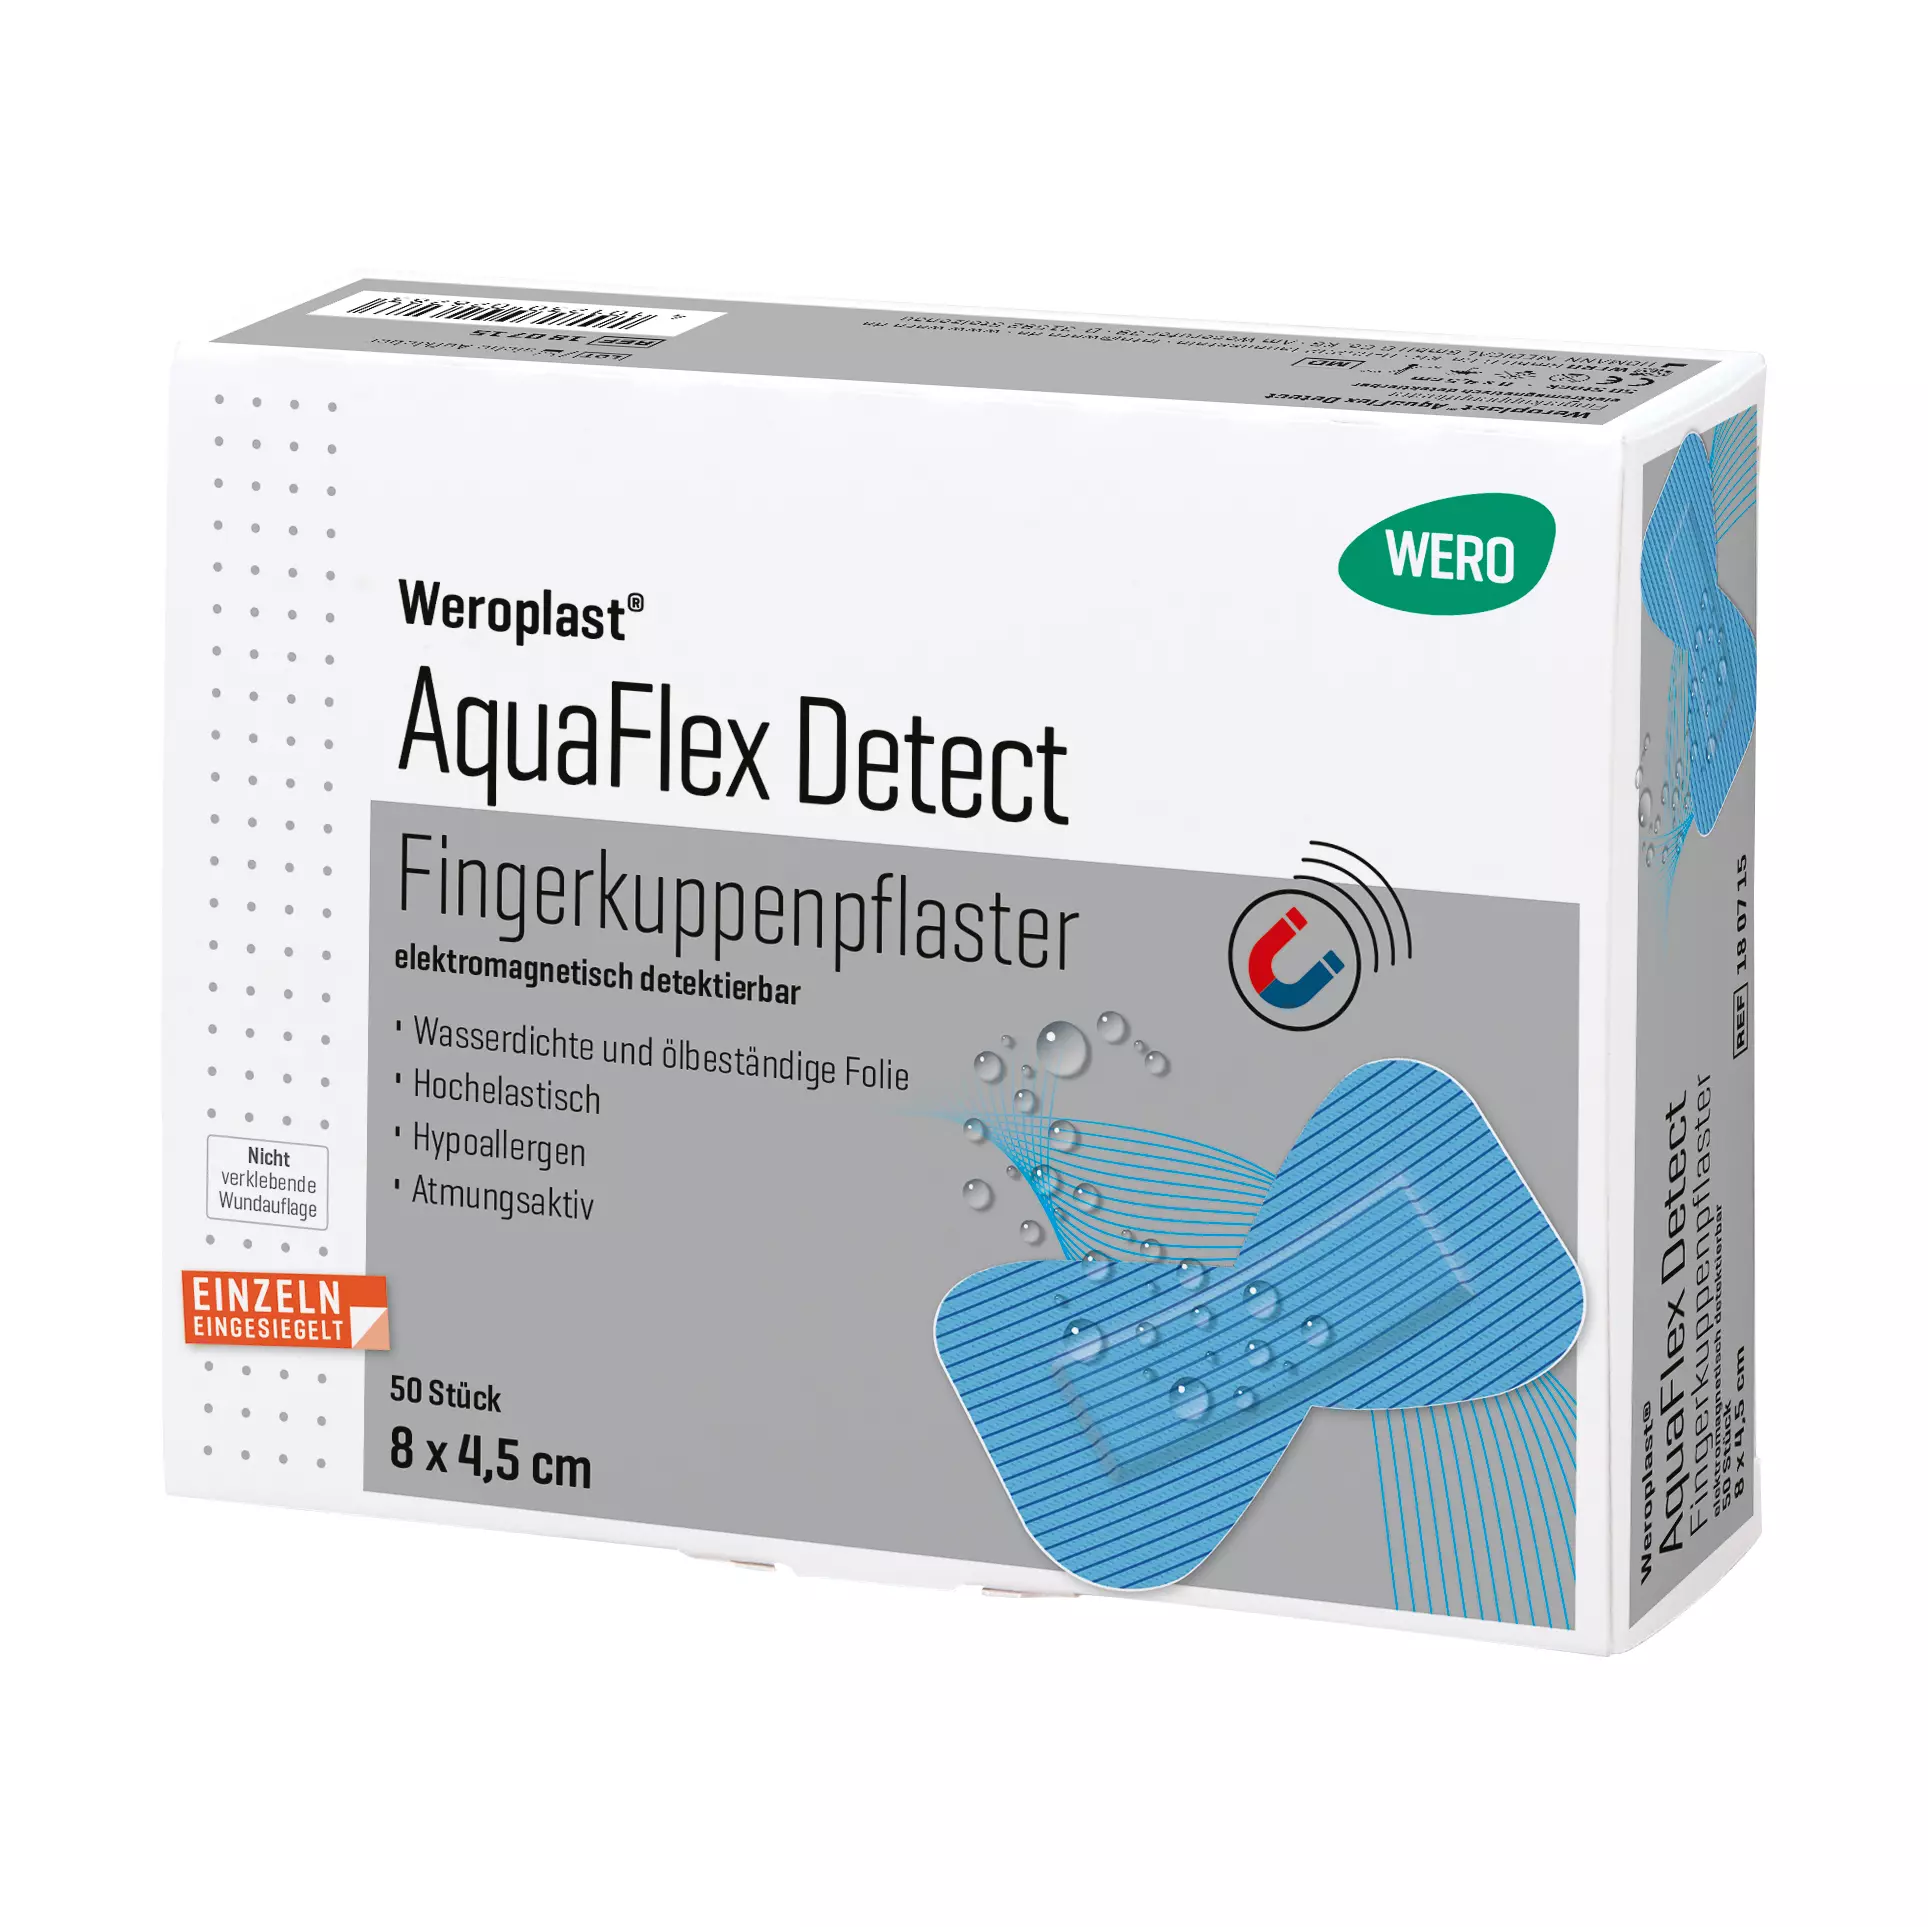 APP Plastiflex-Kunststoffkonturenspachtel mit Härter 1,8kg, 18,23 €